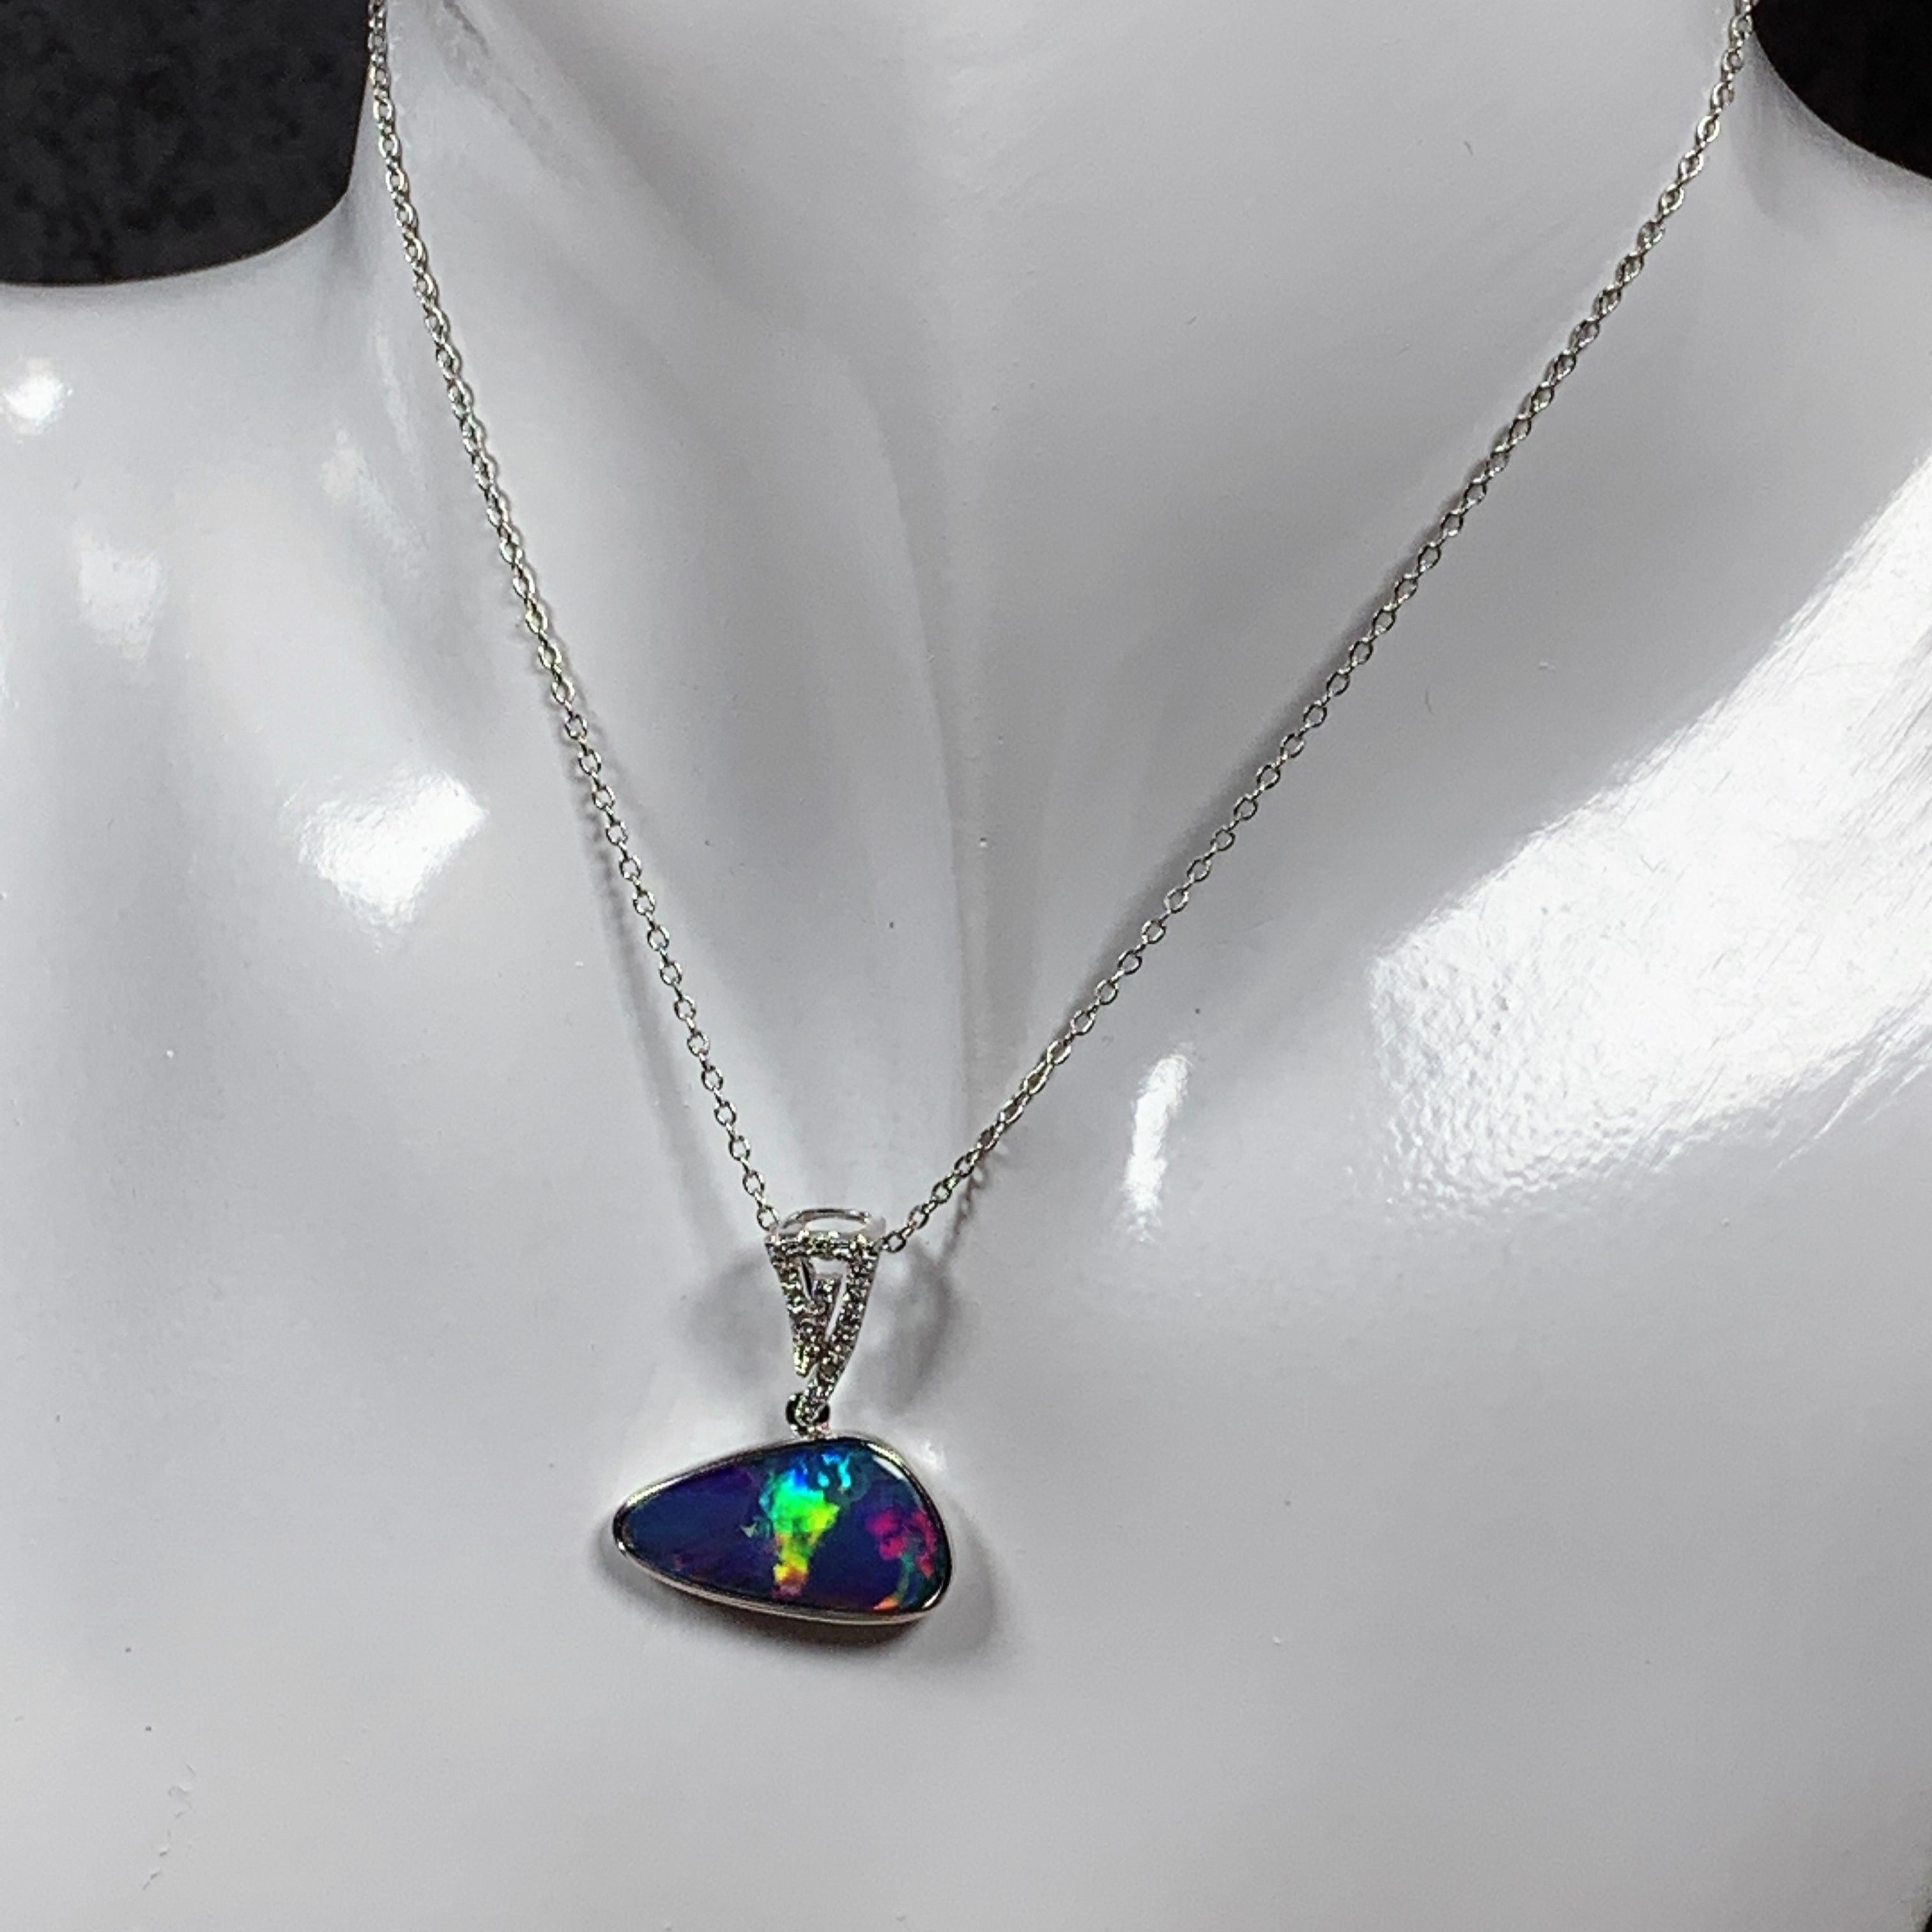 14kt White Gold Opal 3.6ct and Diamond pendant - Masterpiece Jewellery Opal & Gems Sydney Australia | Online Shop